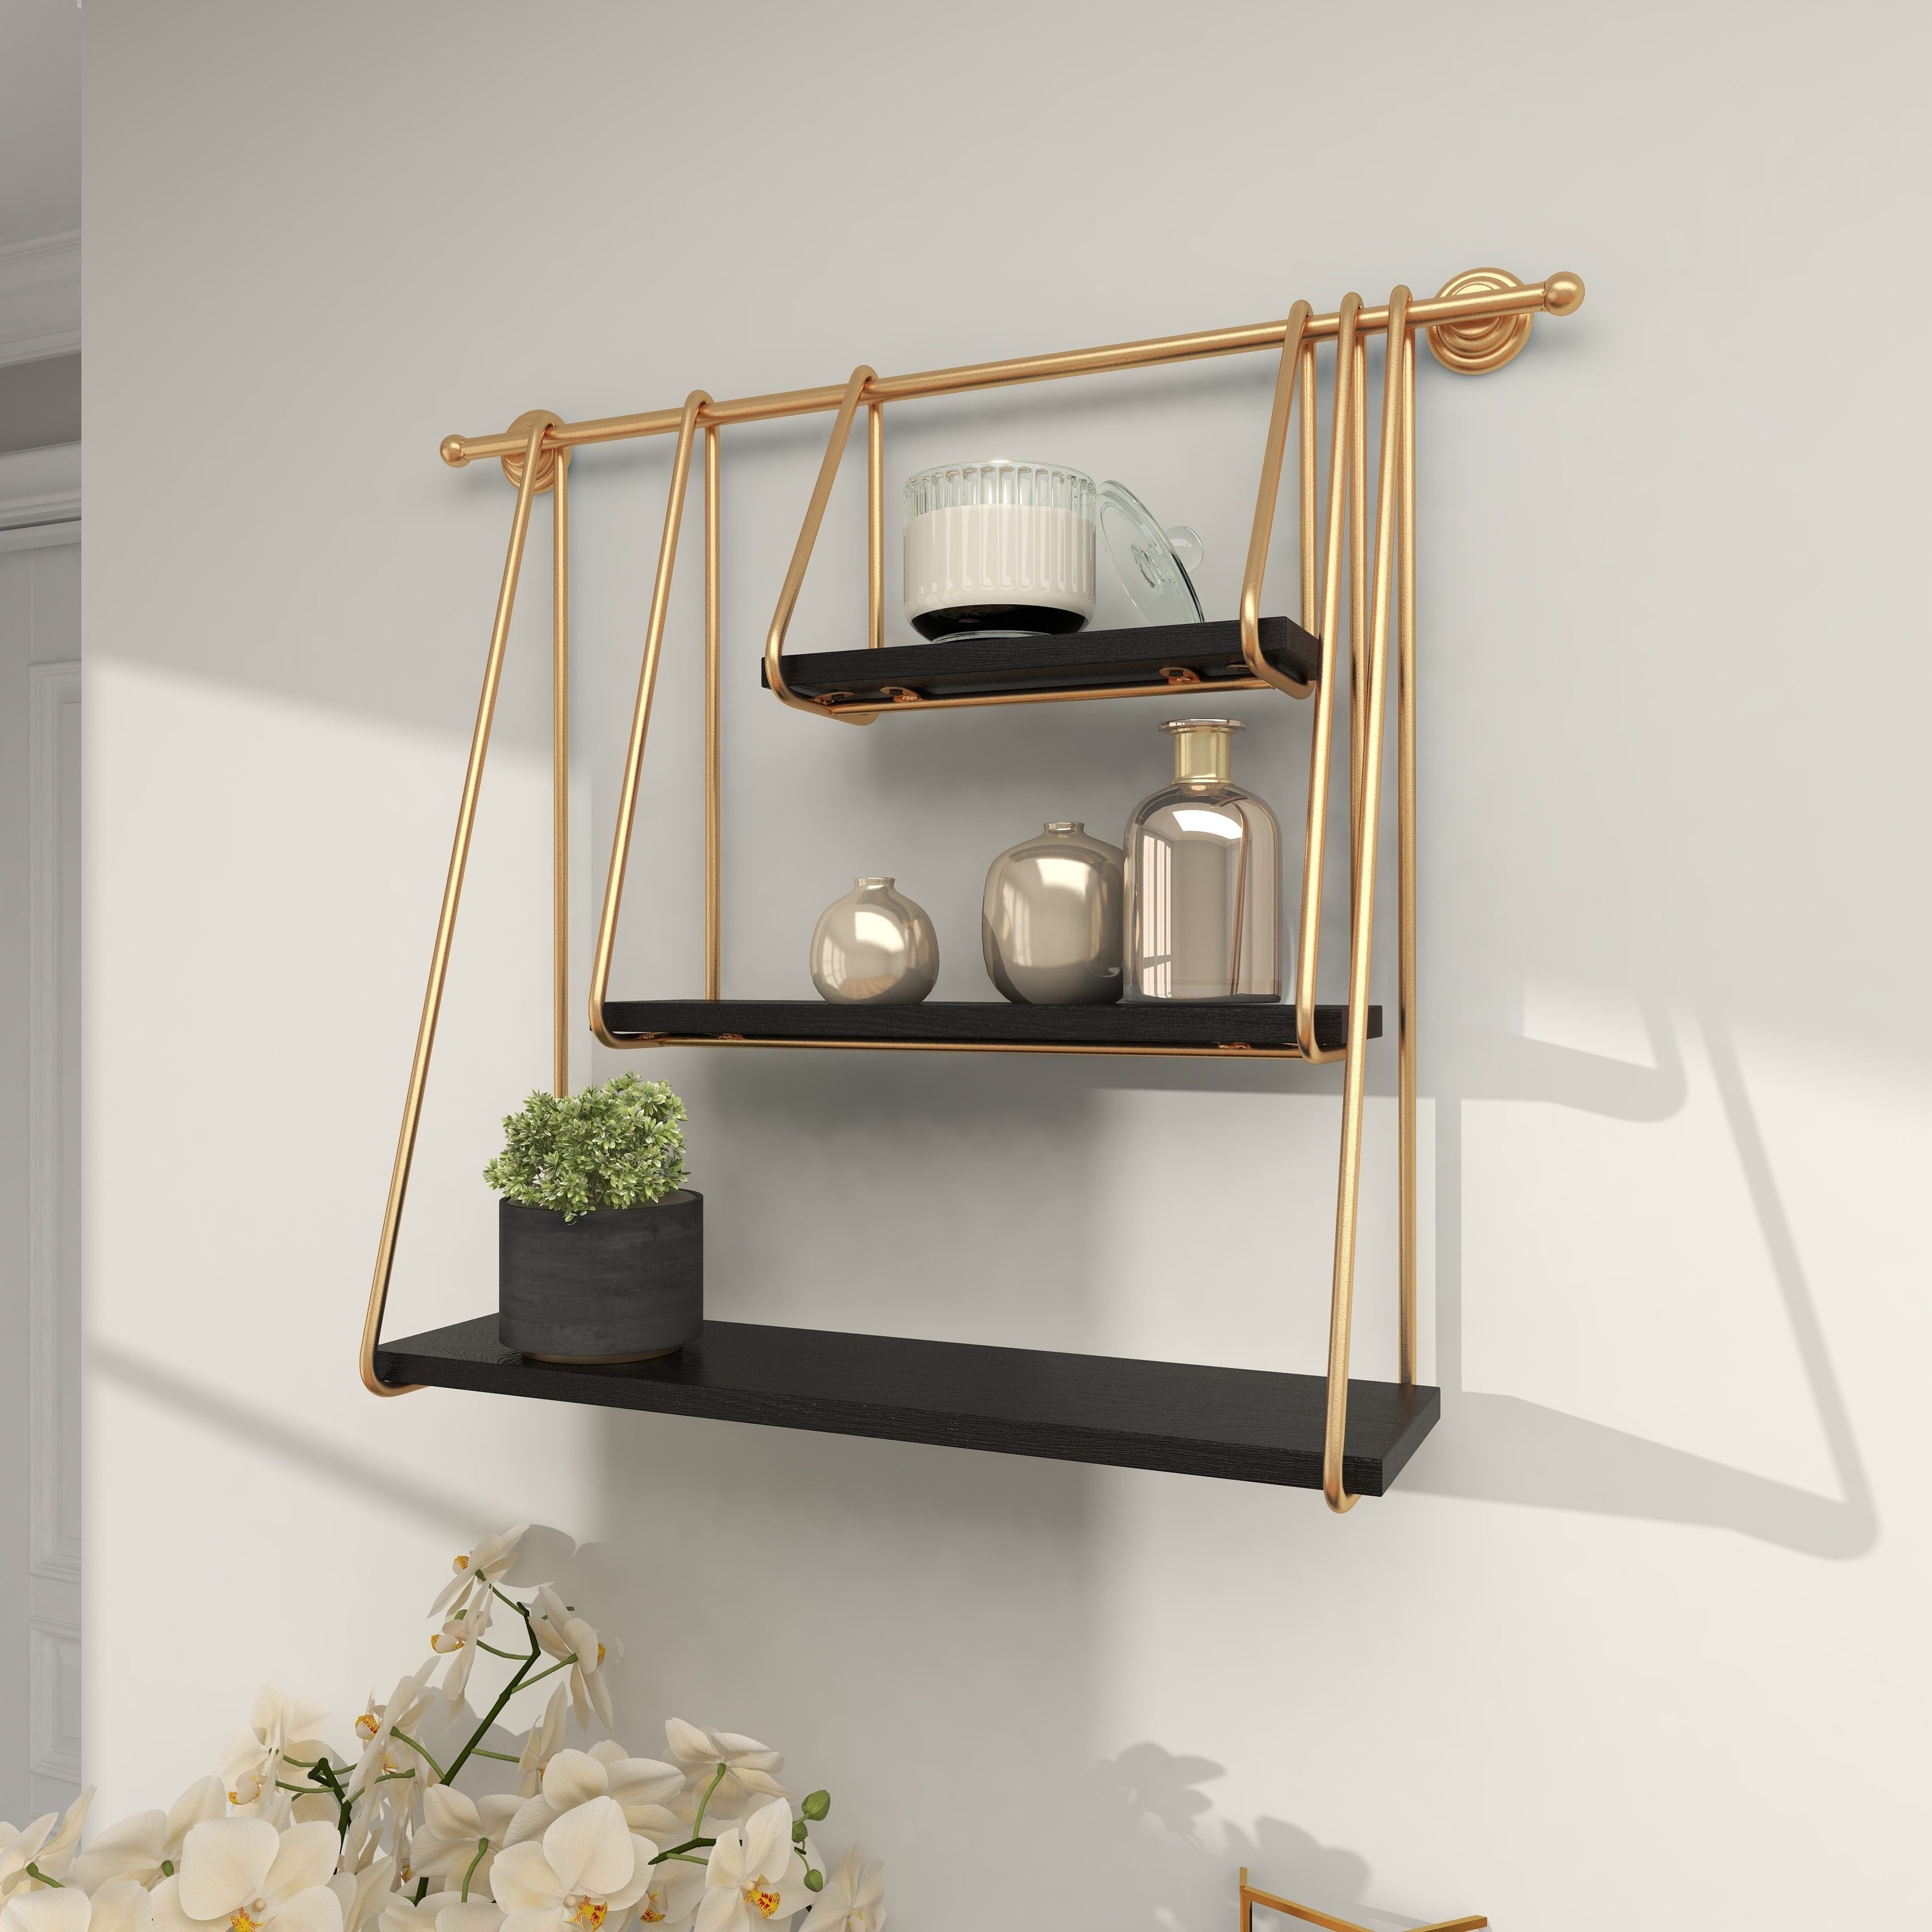 DIY Floating Wood Shelves + Clothing Bar - In Honor Of Design